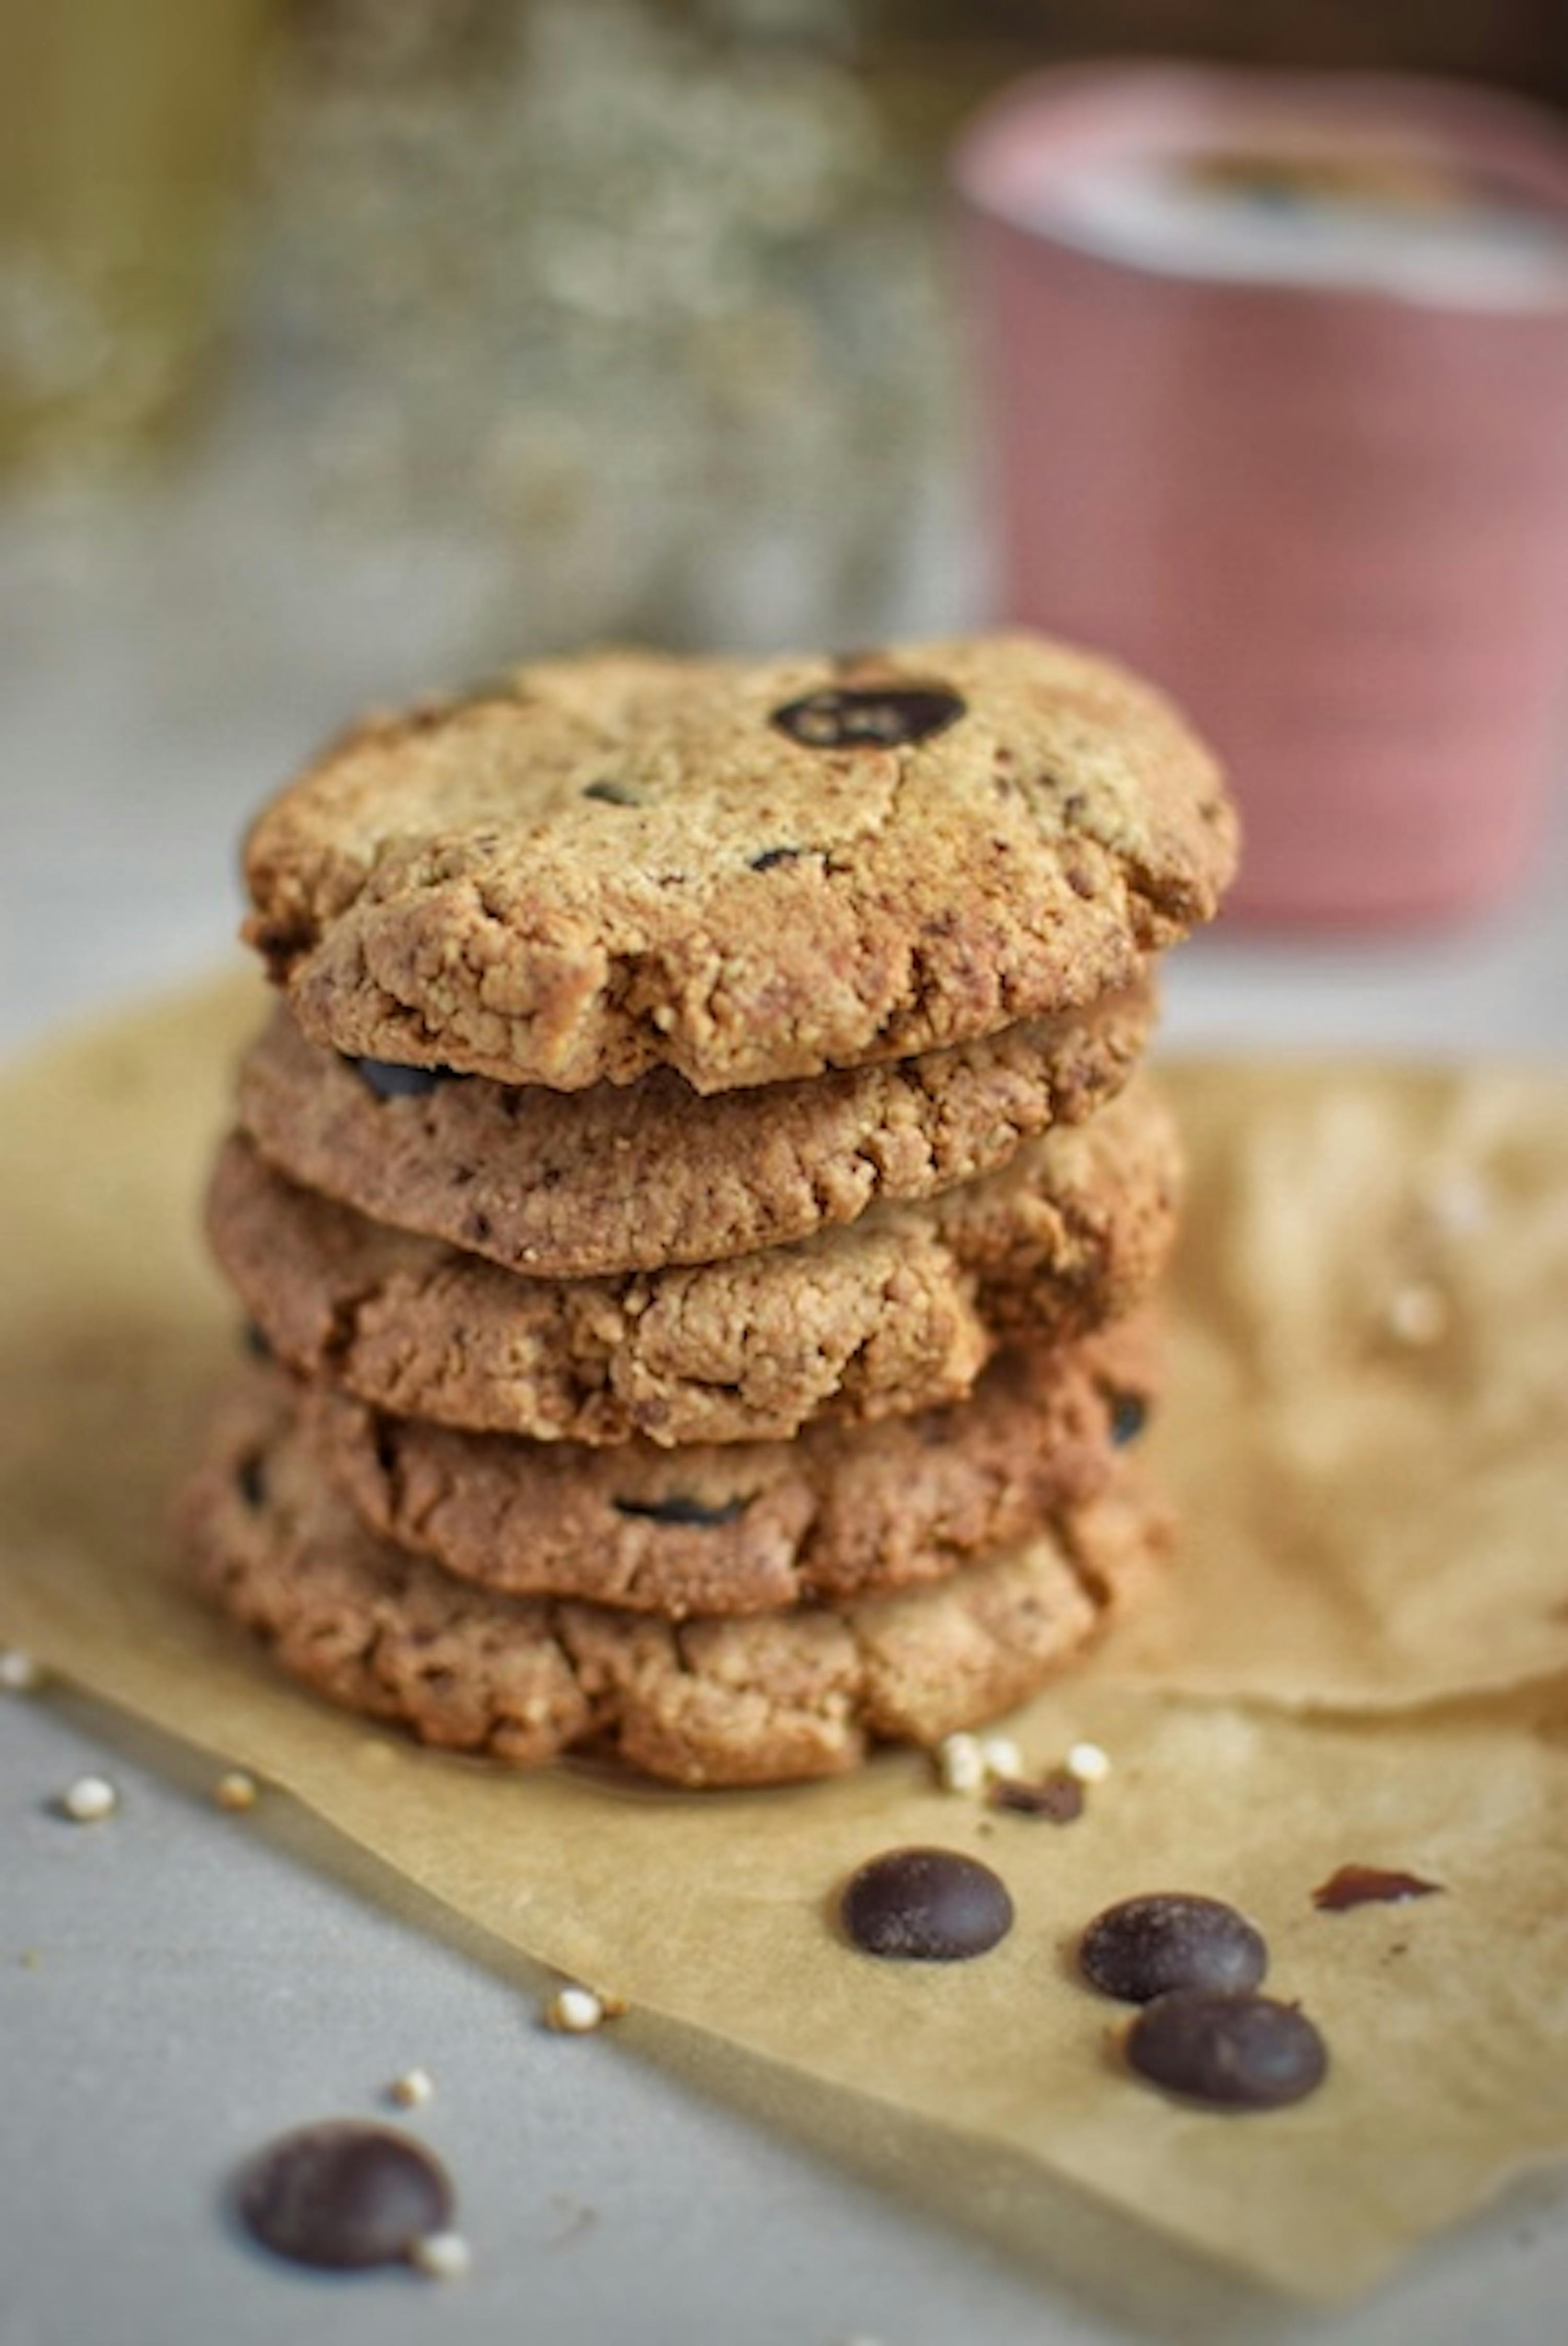 Mini cookies au chocolat sans gluten